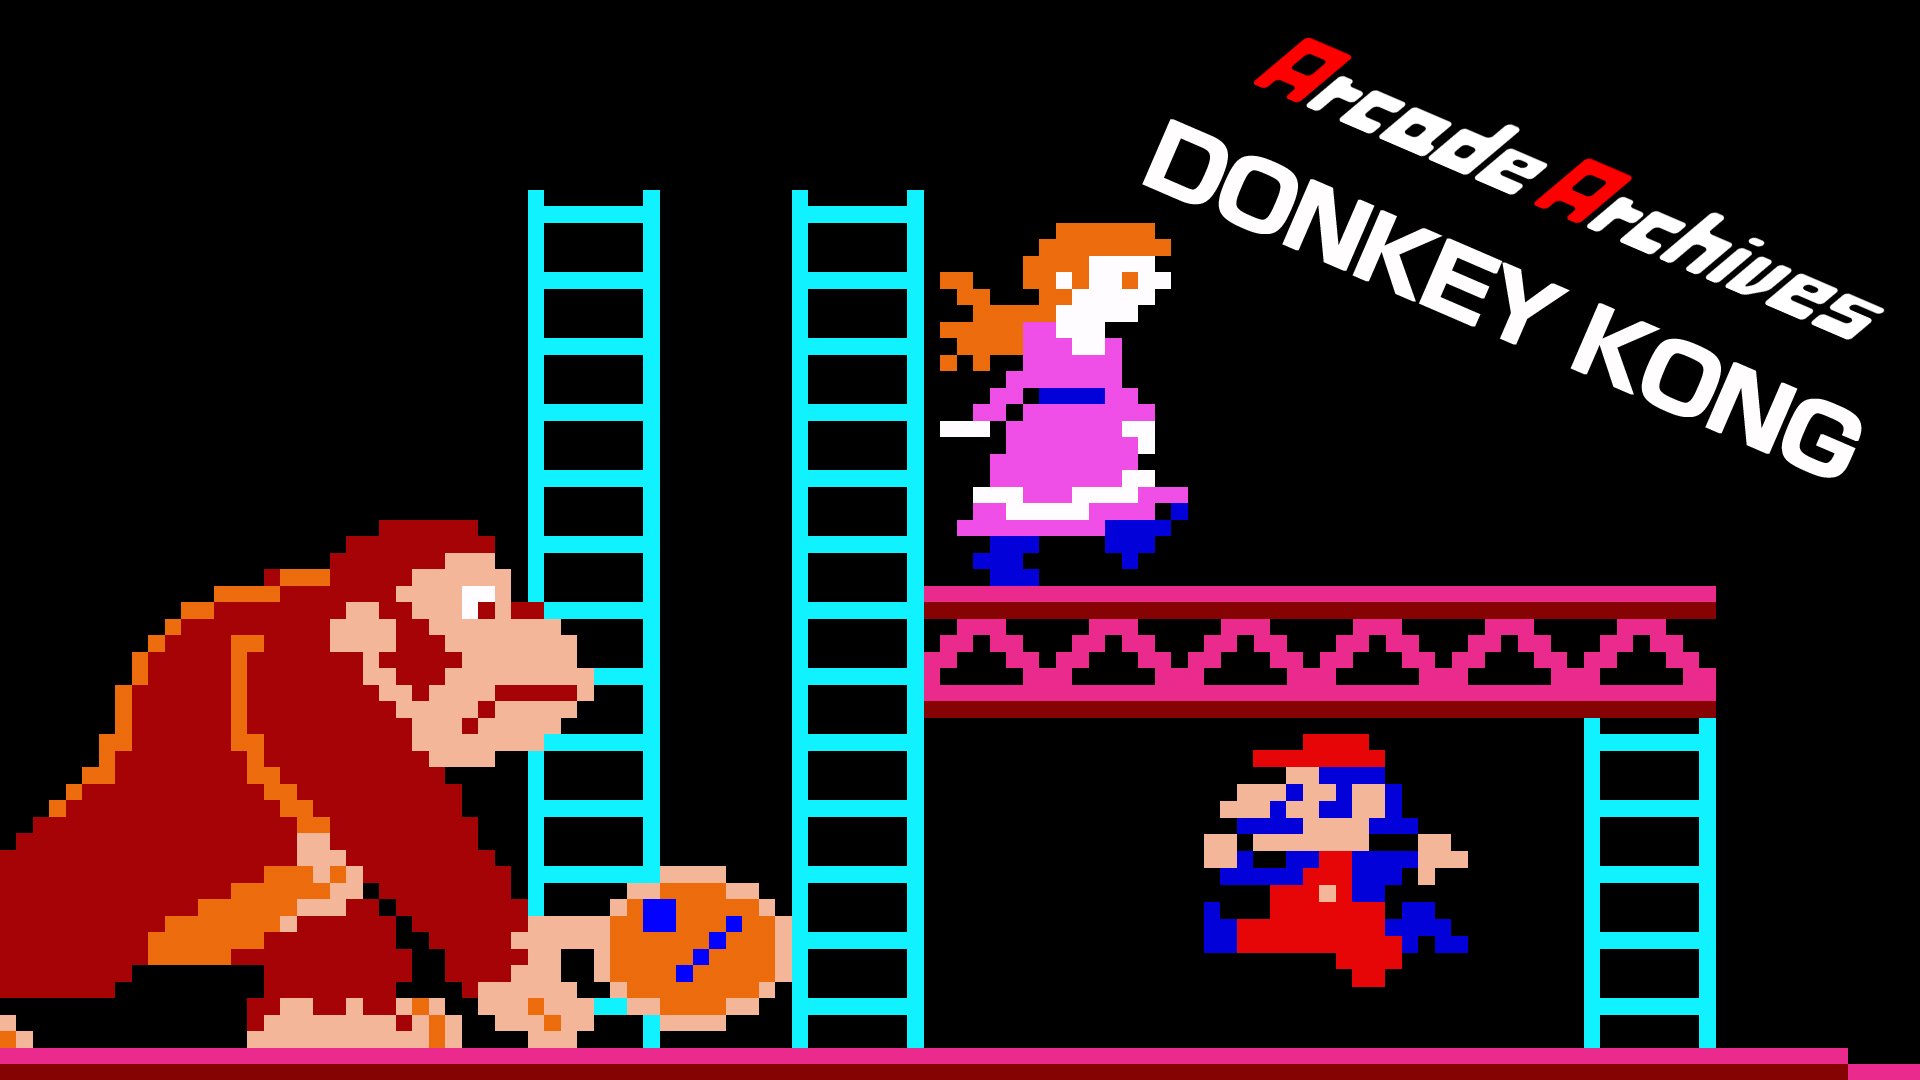 Donkey Kong Classic Arcade